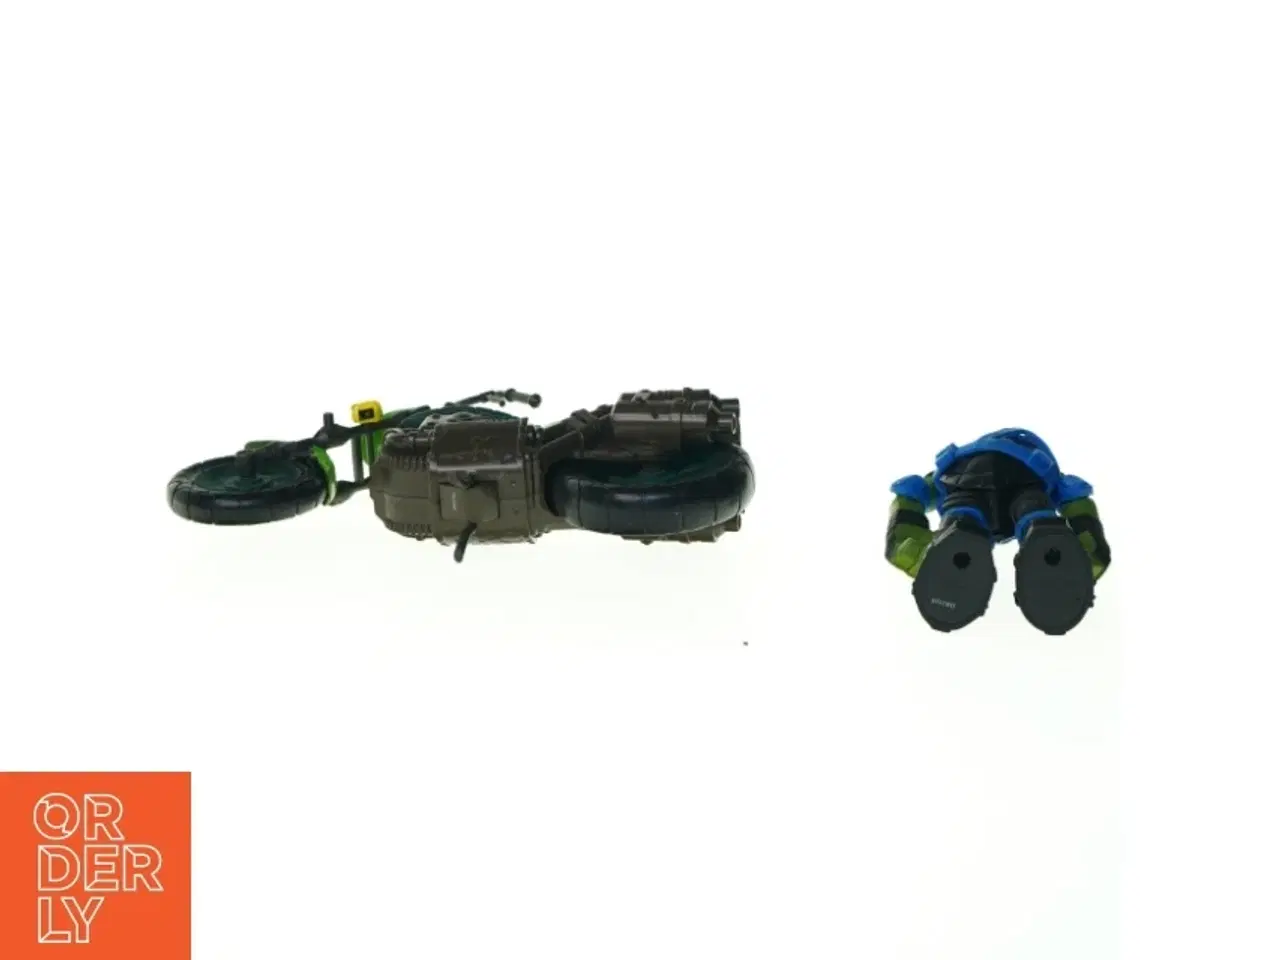 Billede 3 - Teenage mutant ninja turtle med motorcykel fra Viacom (str. 10 cm 20 x 10 cm)